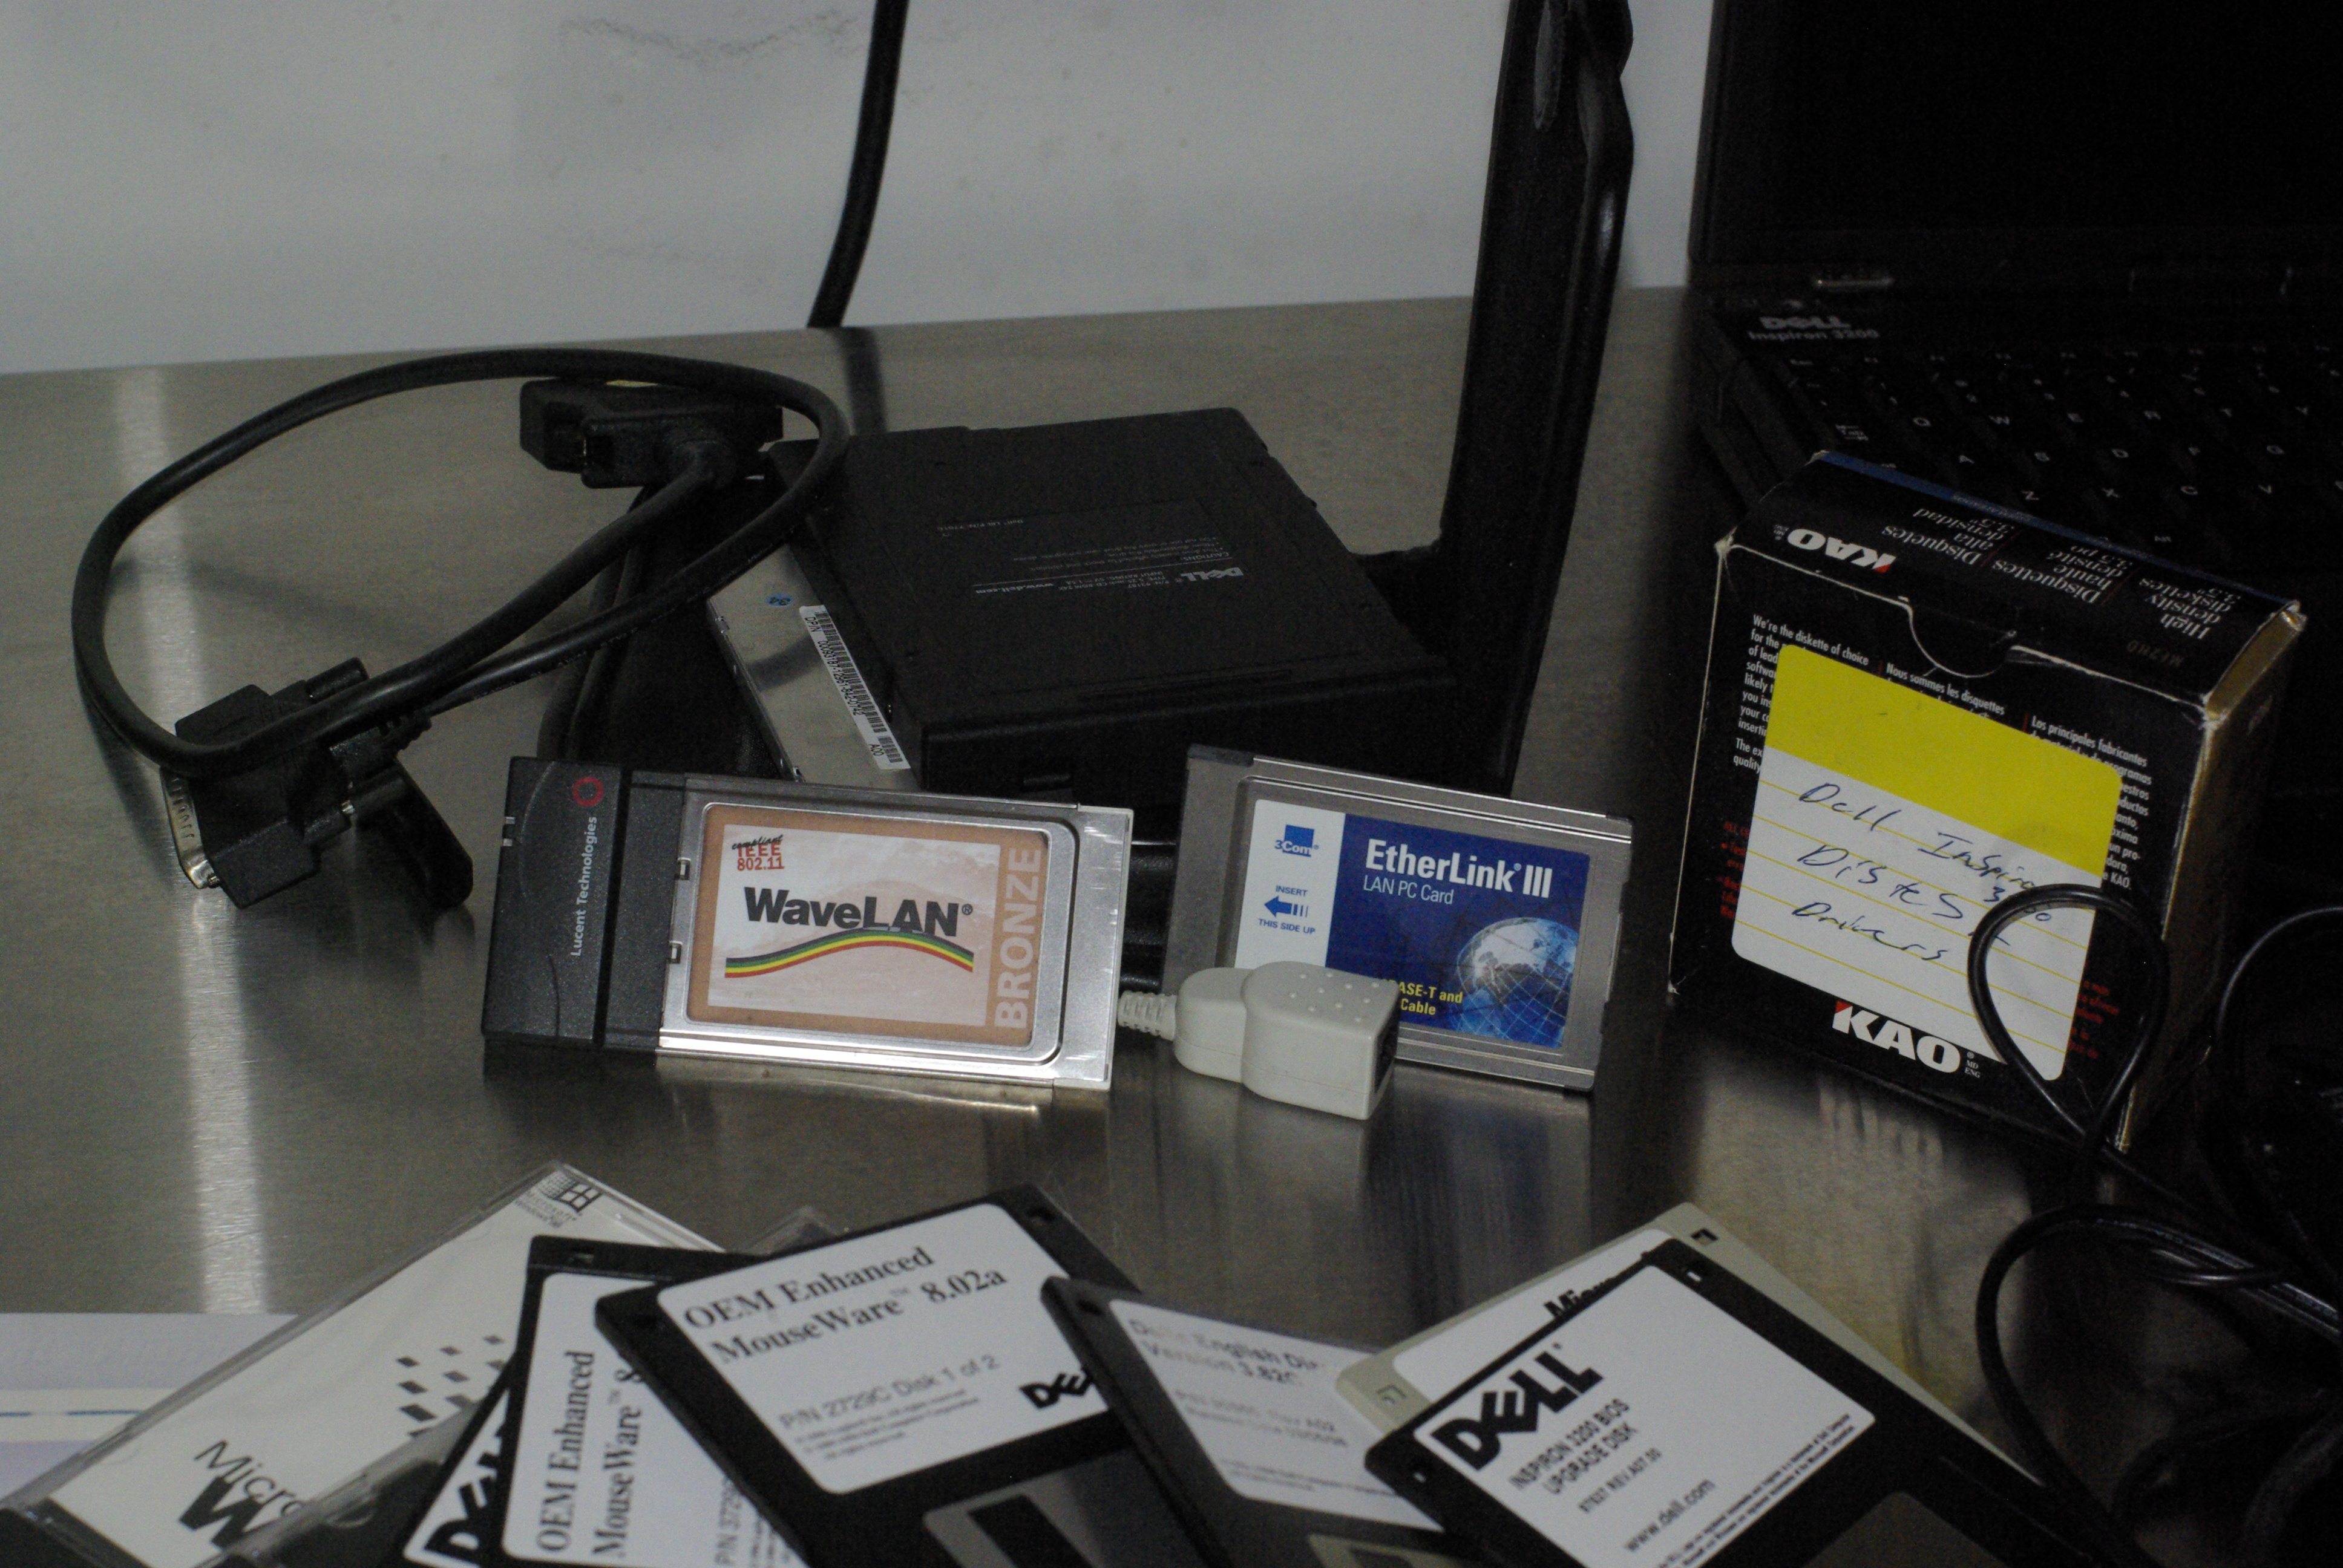 PCMCIA Cards